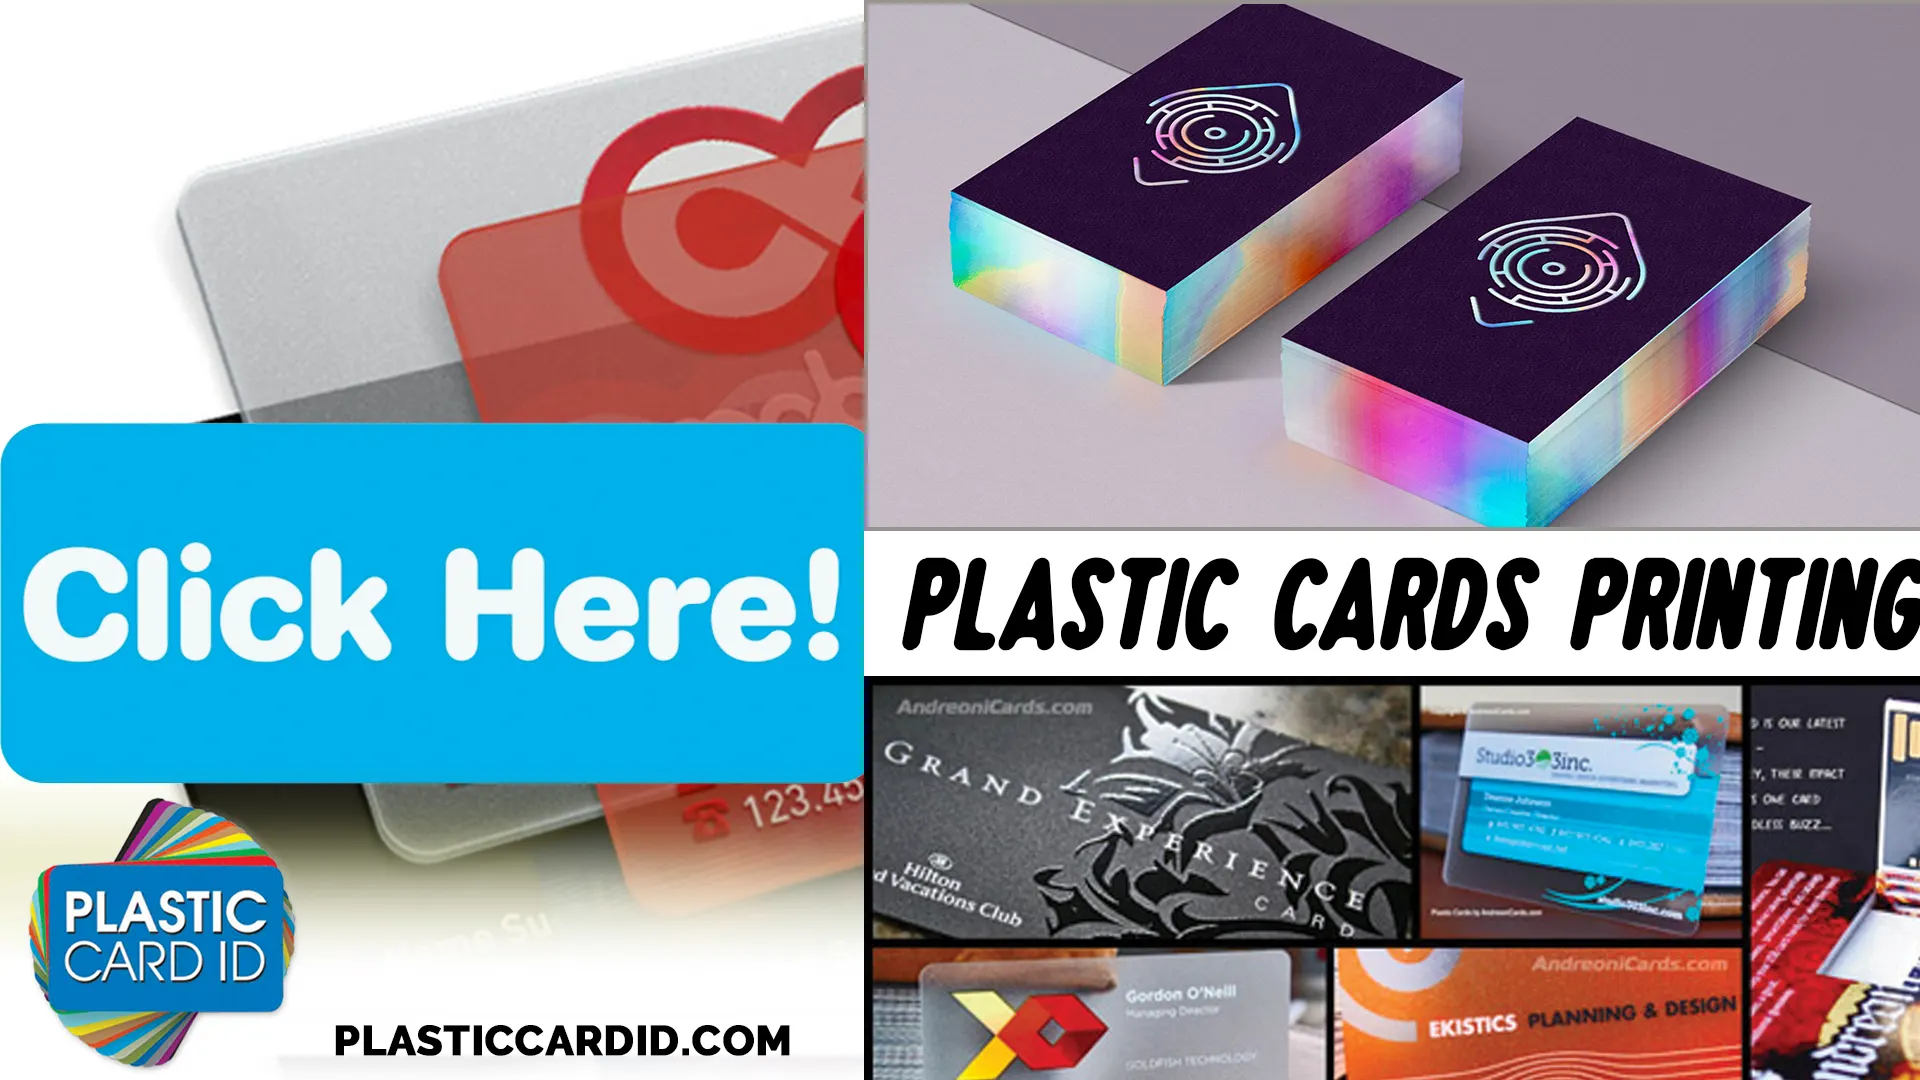 Plastic Card ID
's Eco-friendly Approach